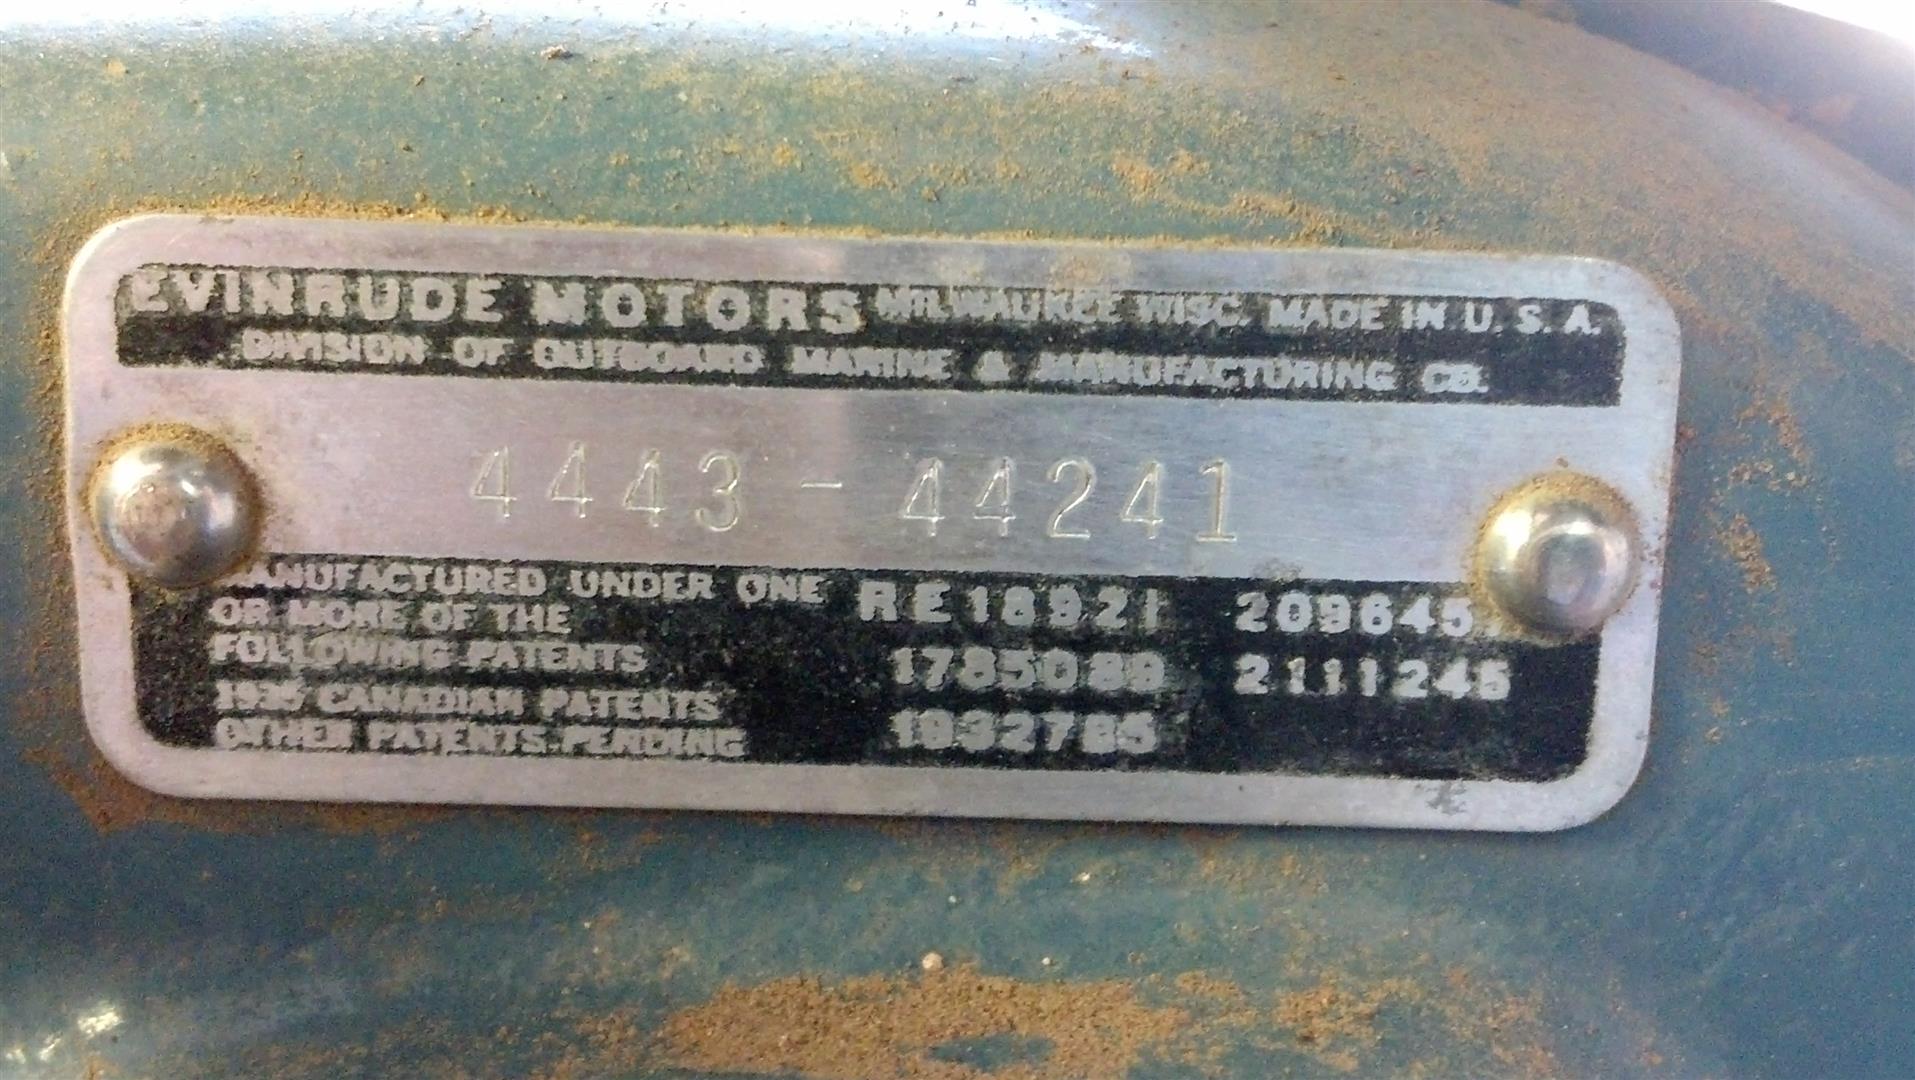 brp serial number